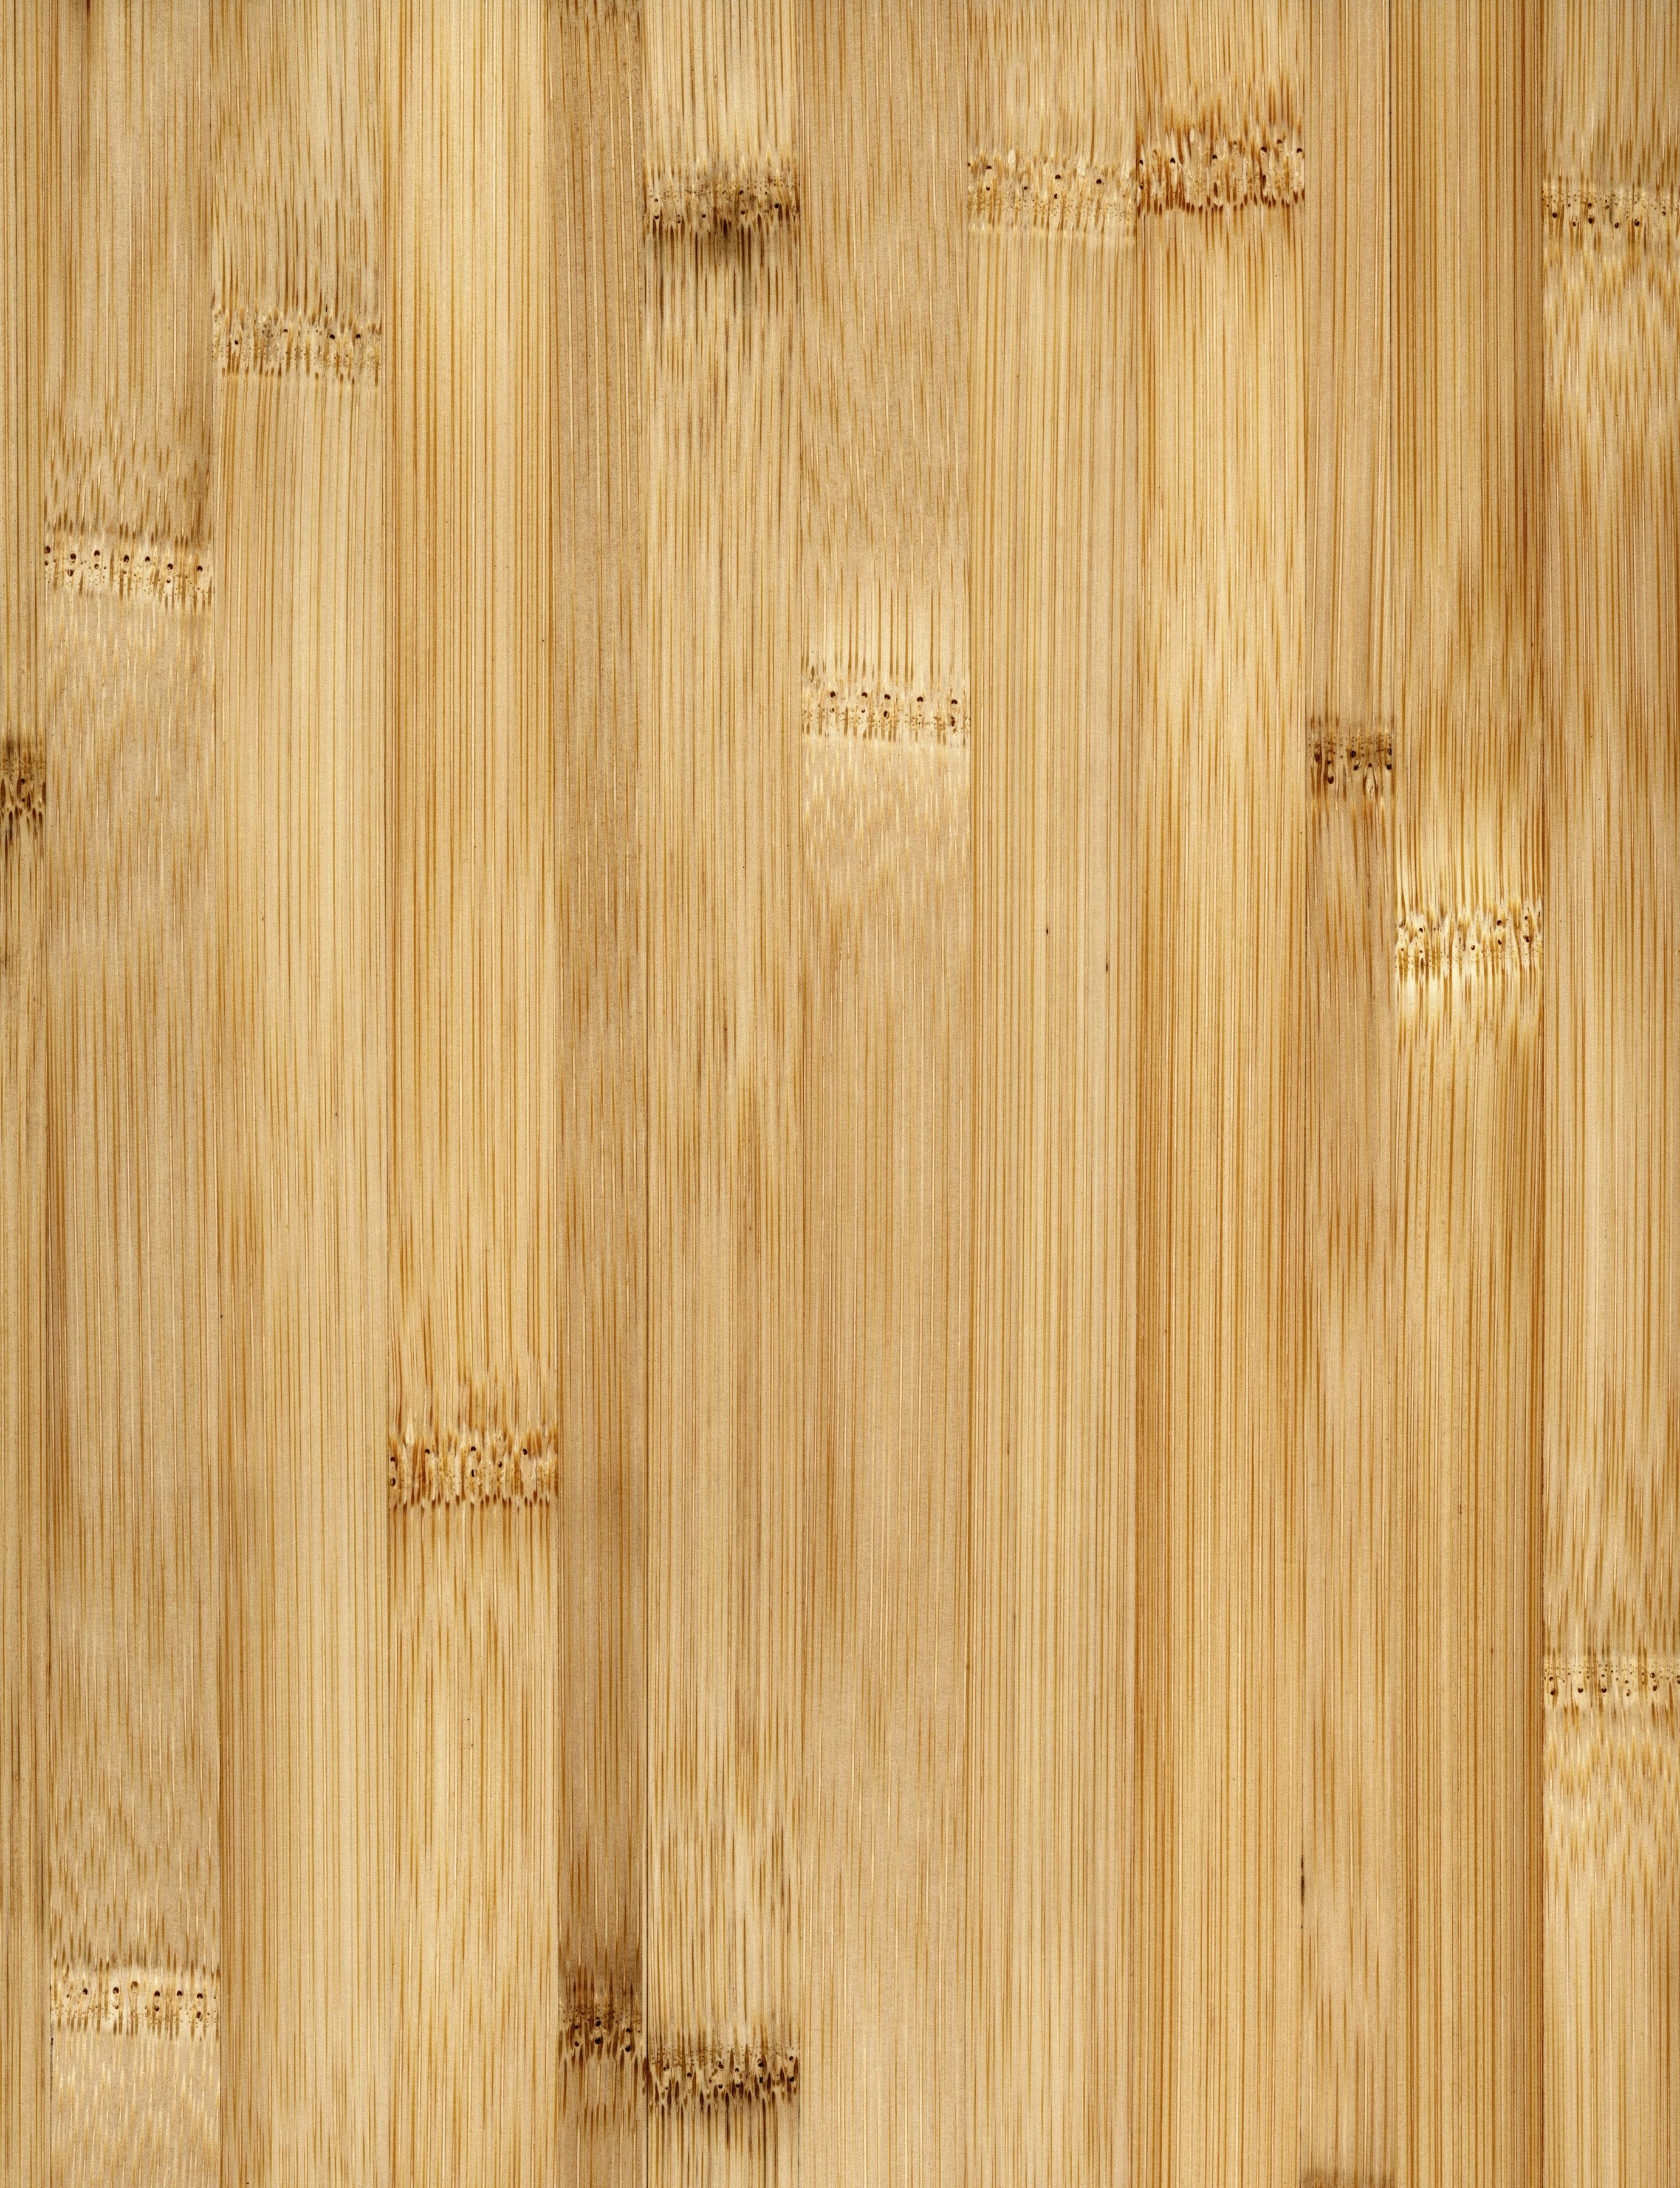 20 Wonderful Hardwood Floor Hardness Table 2024 free download hardwood floor hardness table of bamboo flooring the basics with bamboo floor full frame 200266305 001 588805c03df78c2ccdd4c706